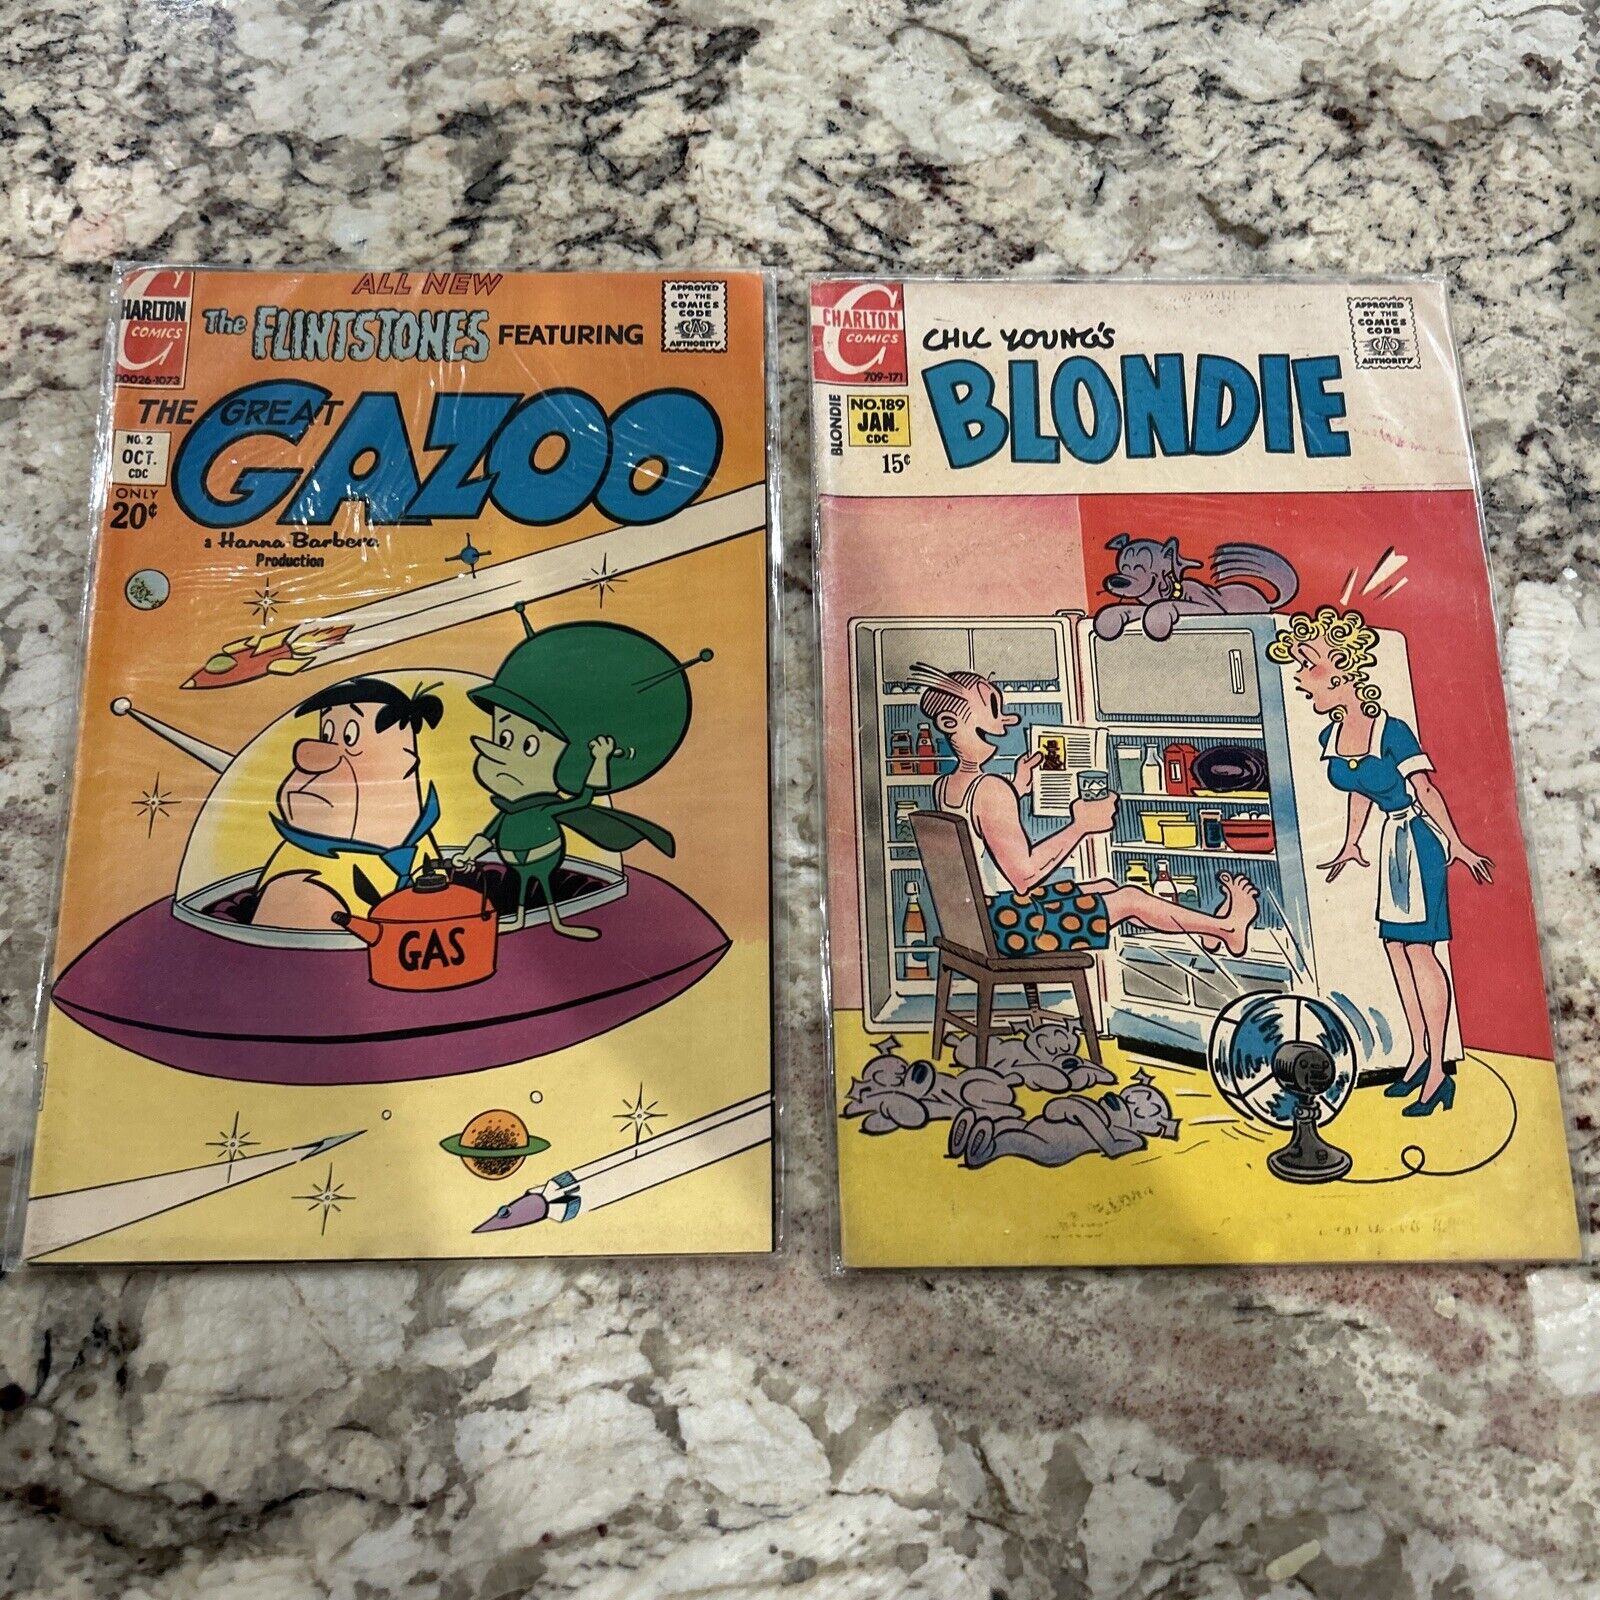 BLONDIE #189 Charlton Comics 1971 Chic Young's Flintstones Gazing #2